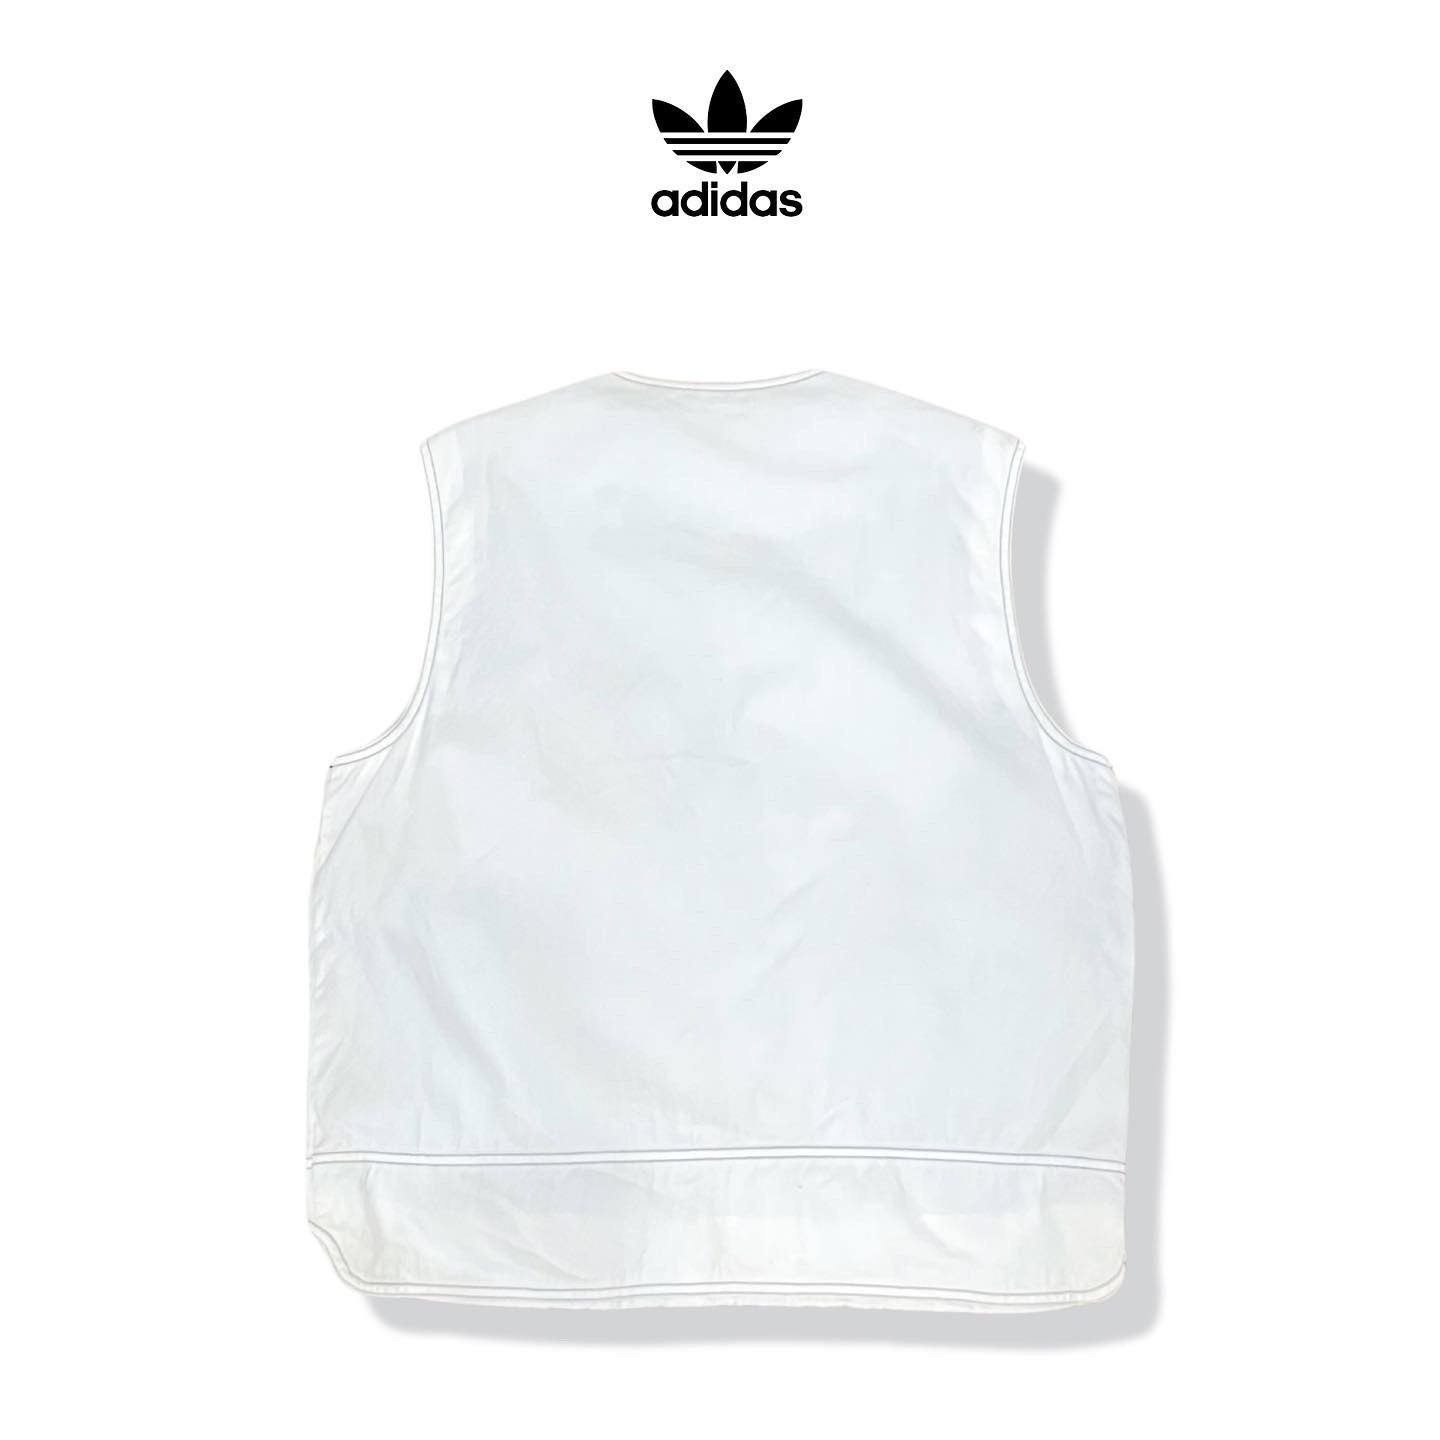 Adidas vest